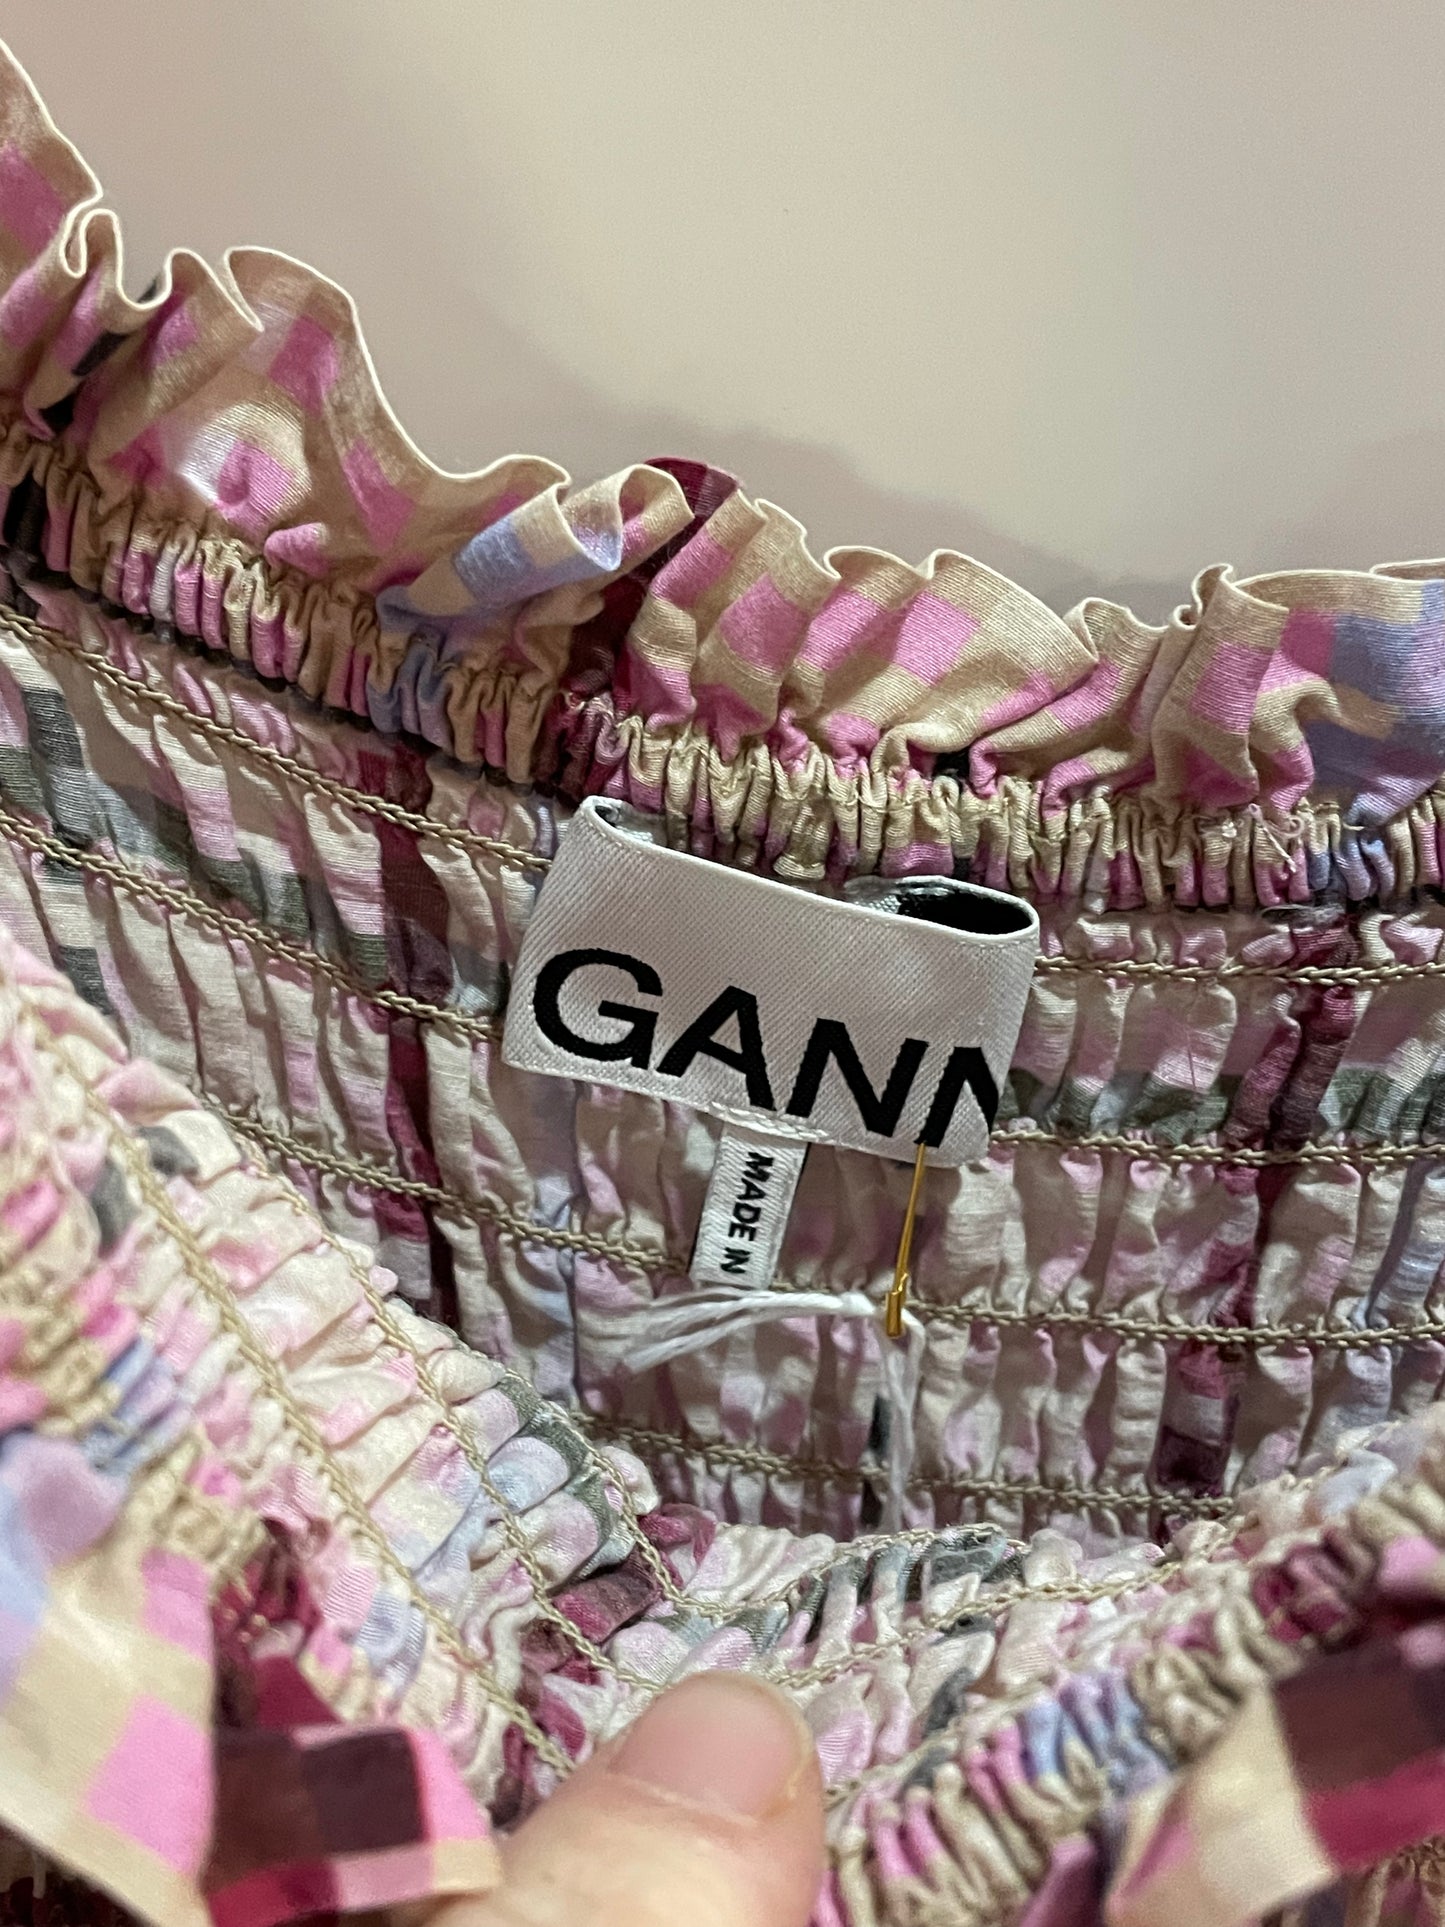 PEARLE closet - Ganni pink plaid smocked dress